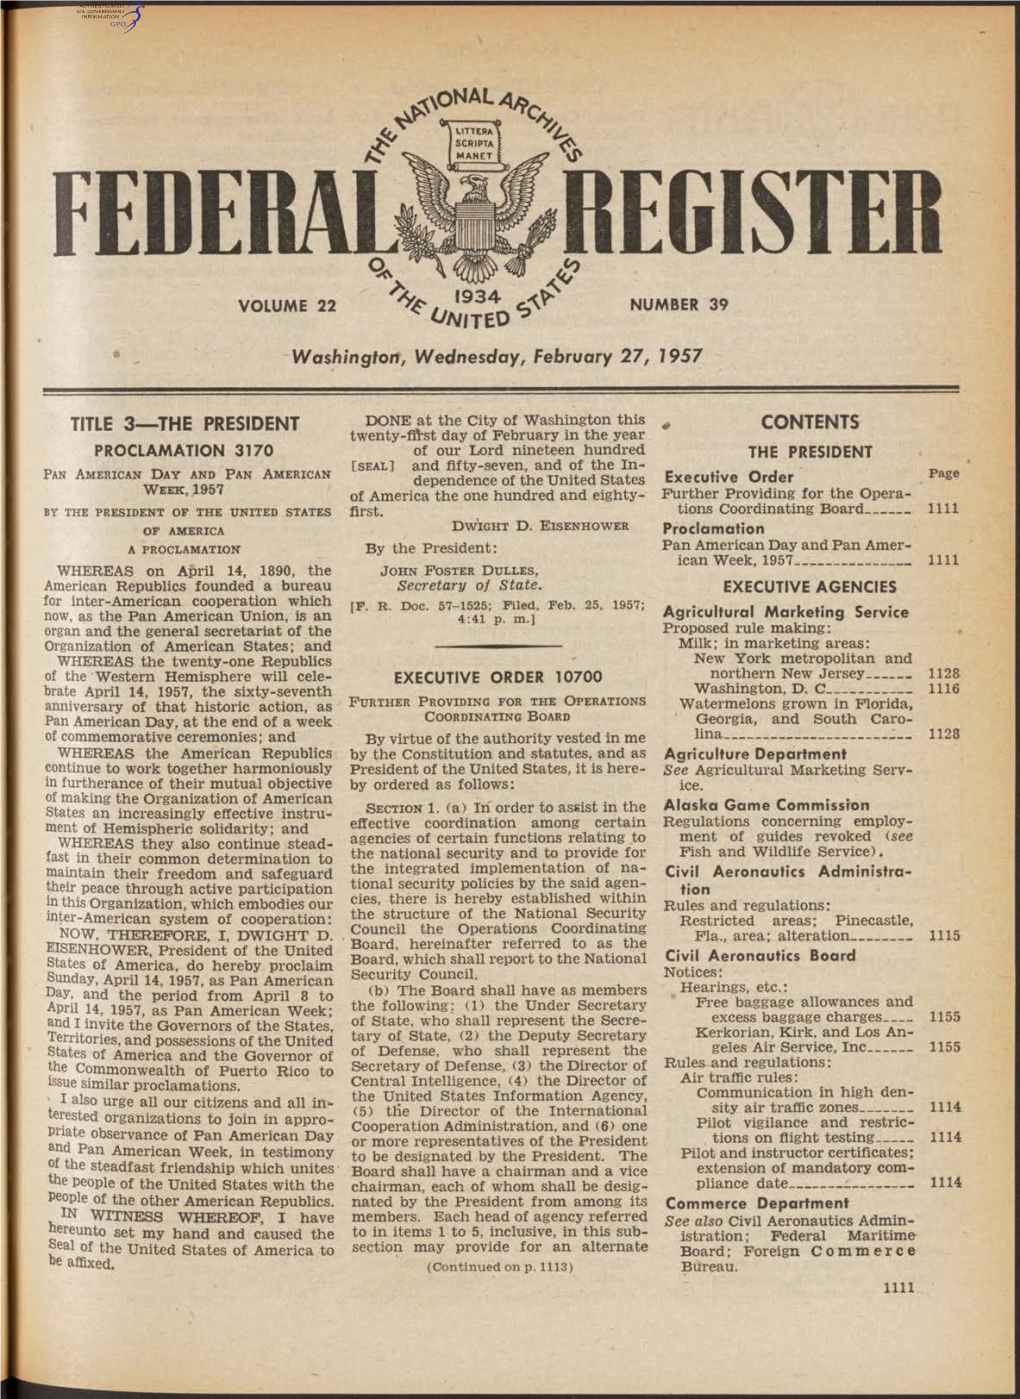 Washington, Wednesday, February 27, 1957 TITLE 3—THE PRESIDENT , CONTENTS